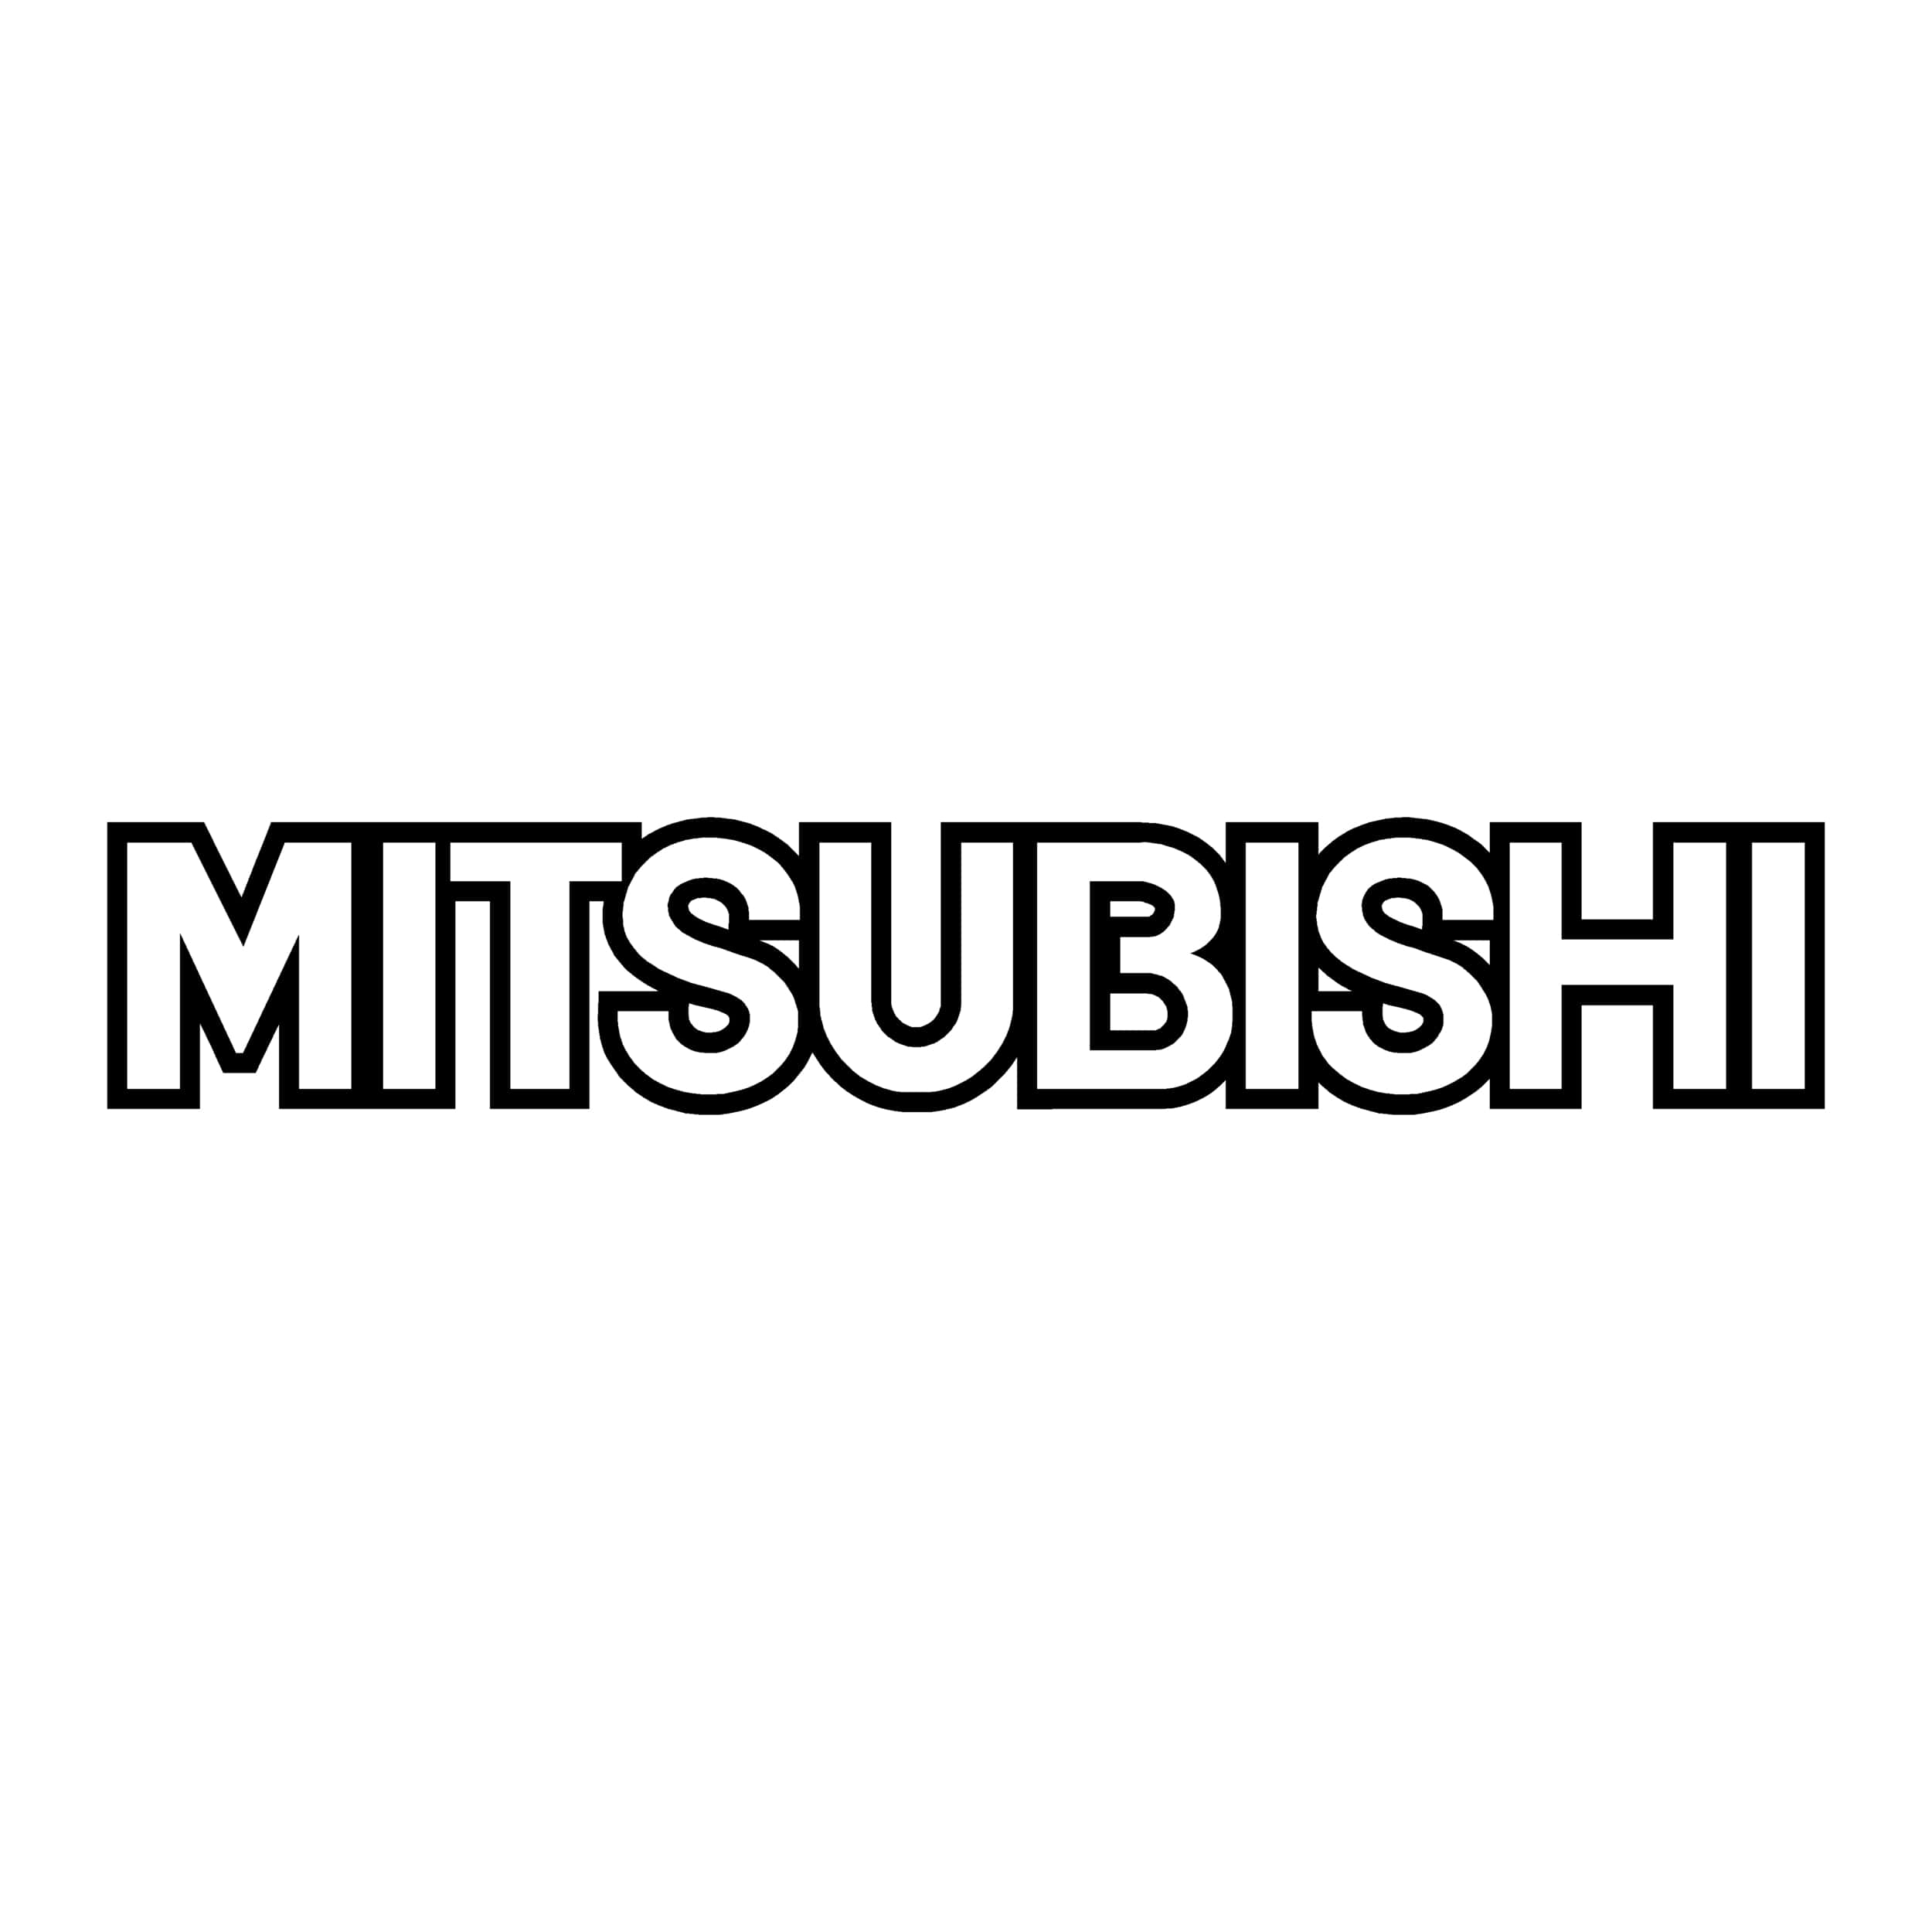 sticker-mitsubishi-ref-19-logo-l200-pajero-sport-4x4-land-tout-terrain-competition-rallye-autocollant-stickers-min